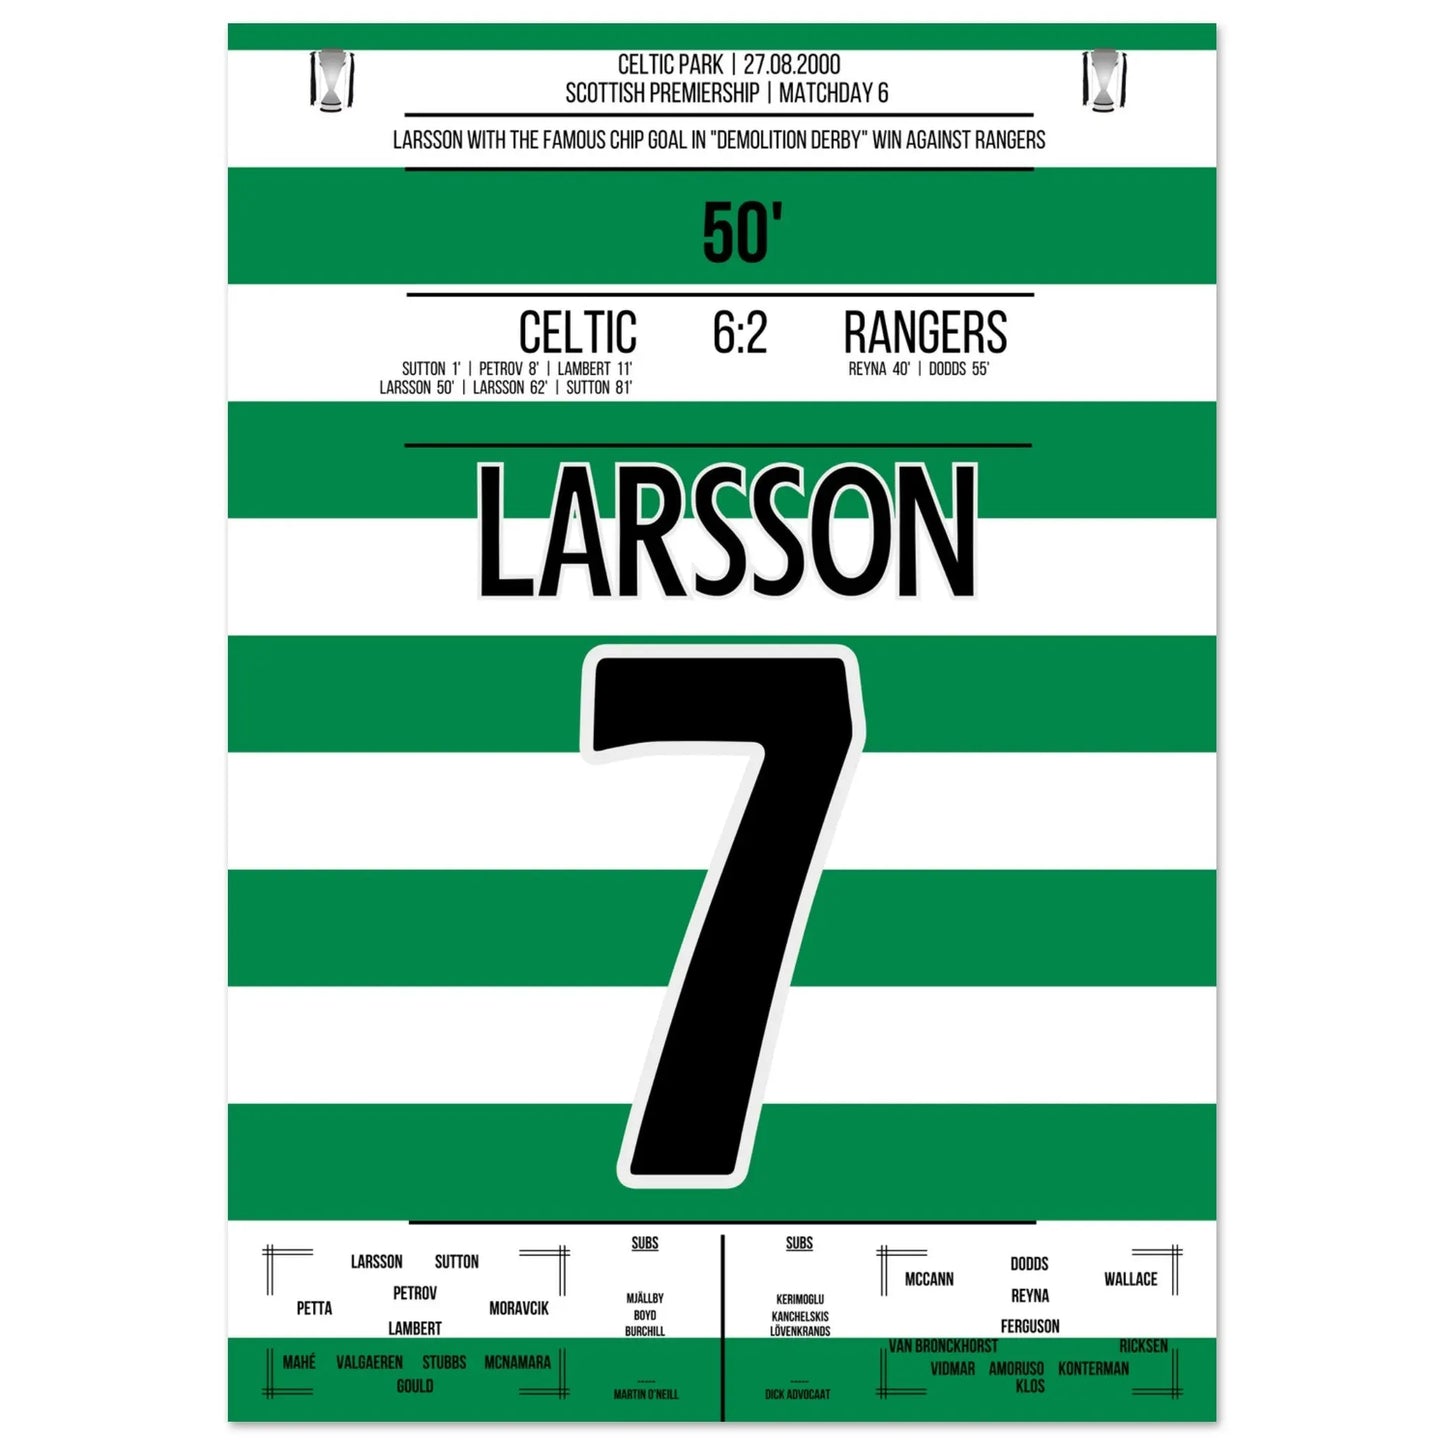 Larsson's legendärer "Chip" im "Demolition Derby" in 2000